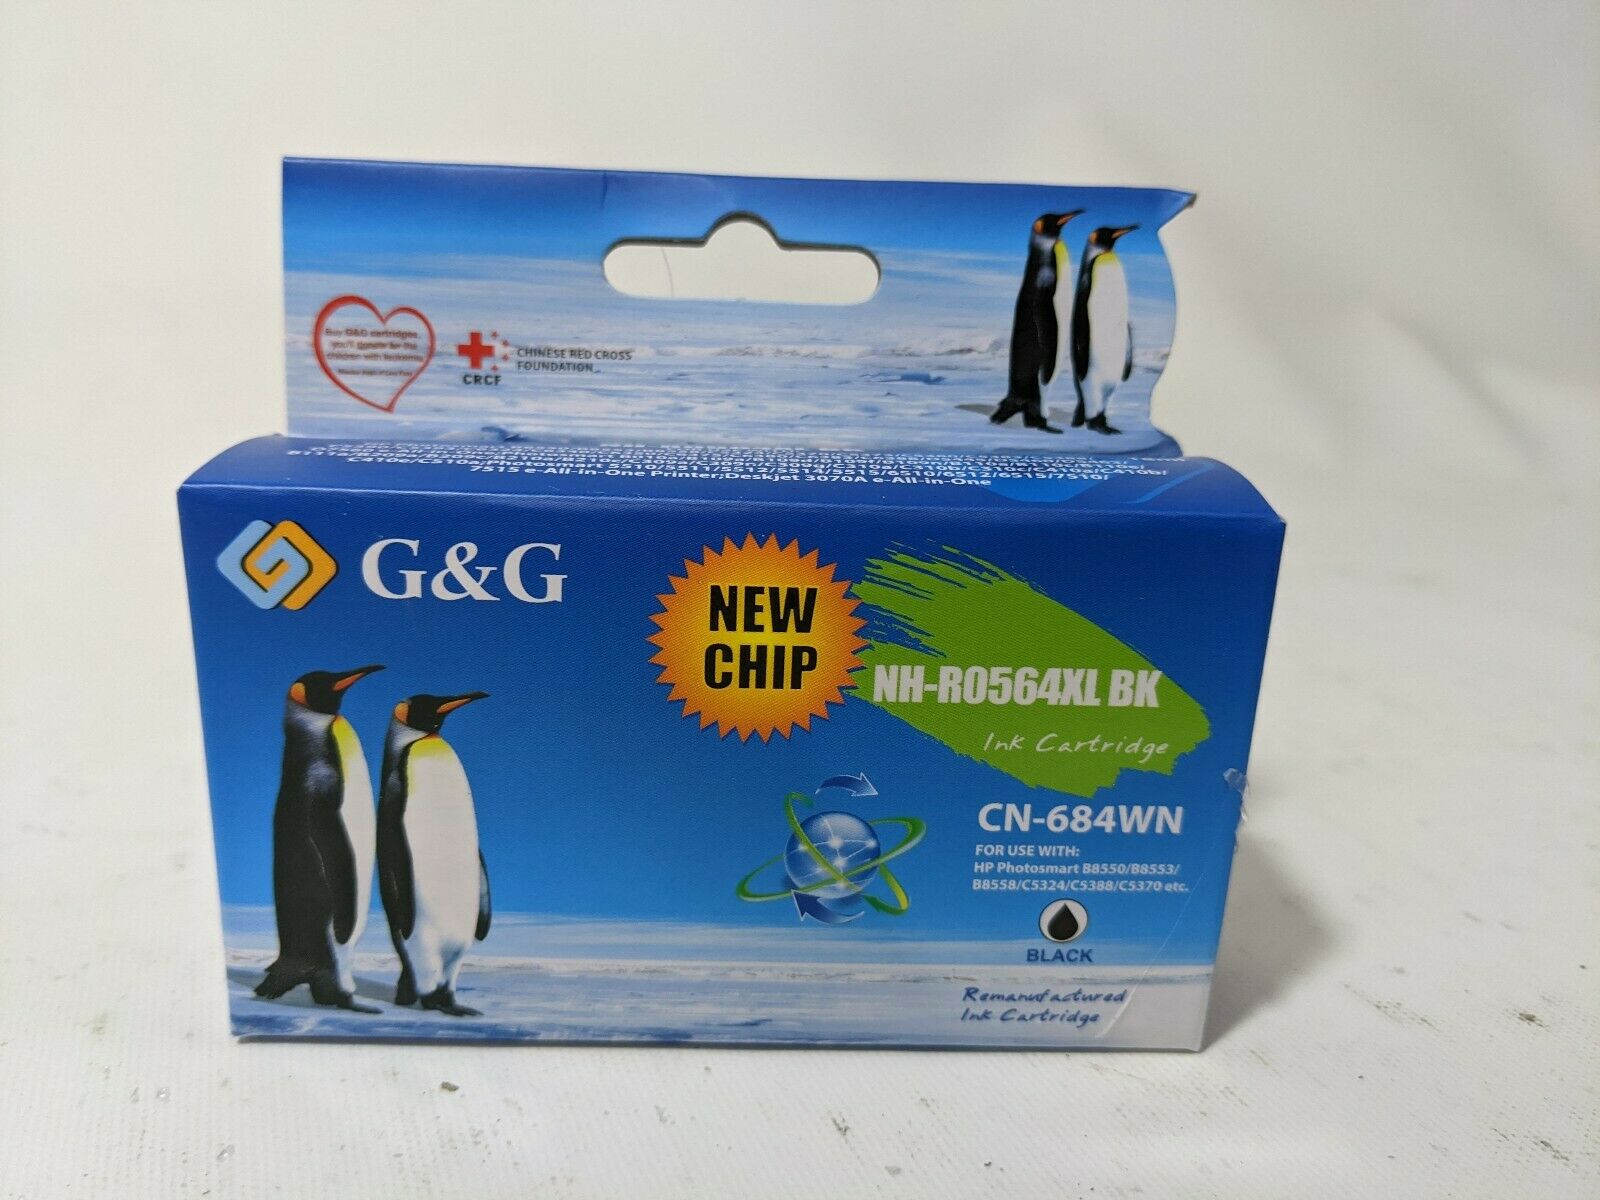 G&G NH-R0564XL BK Ink Cartridge for HP Photosmart B8550/B8553/B8558, GA